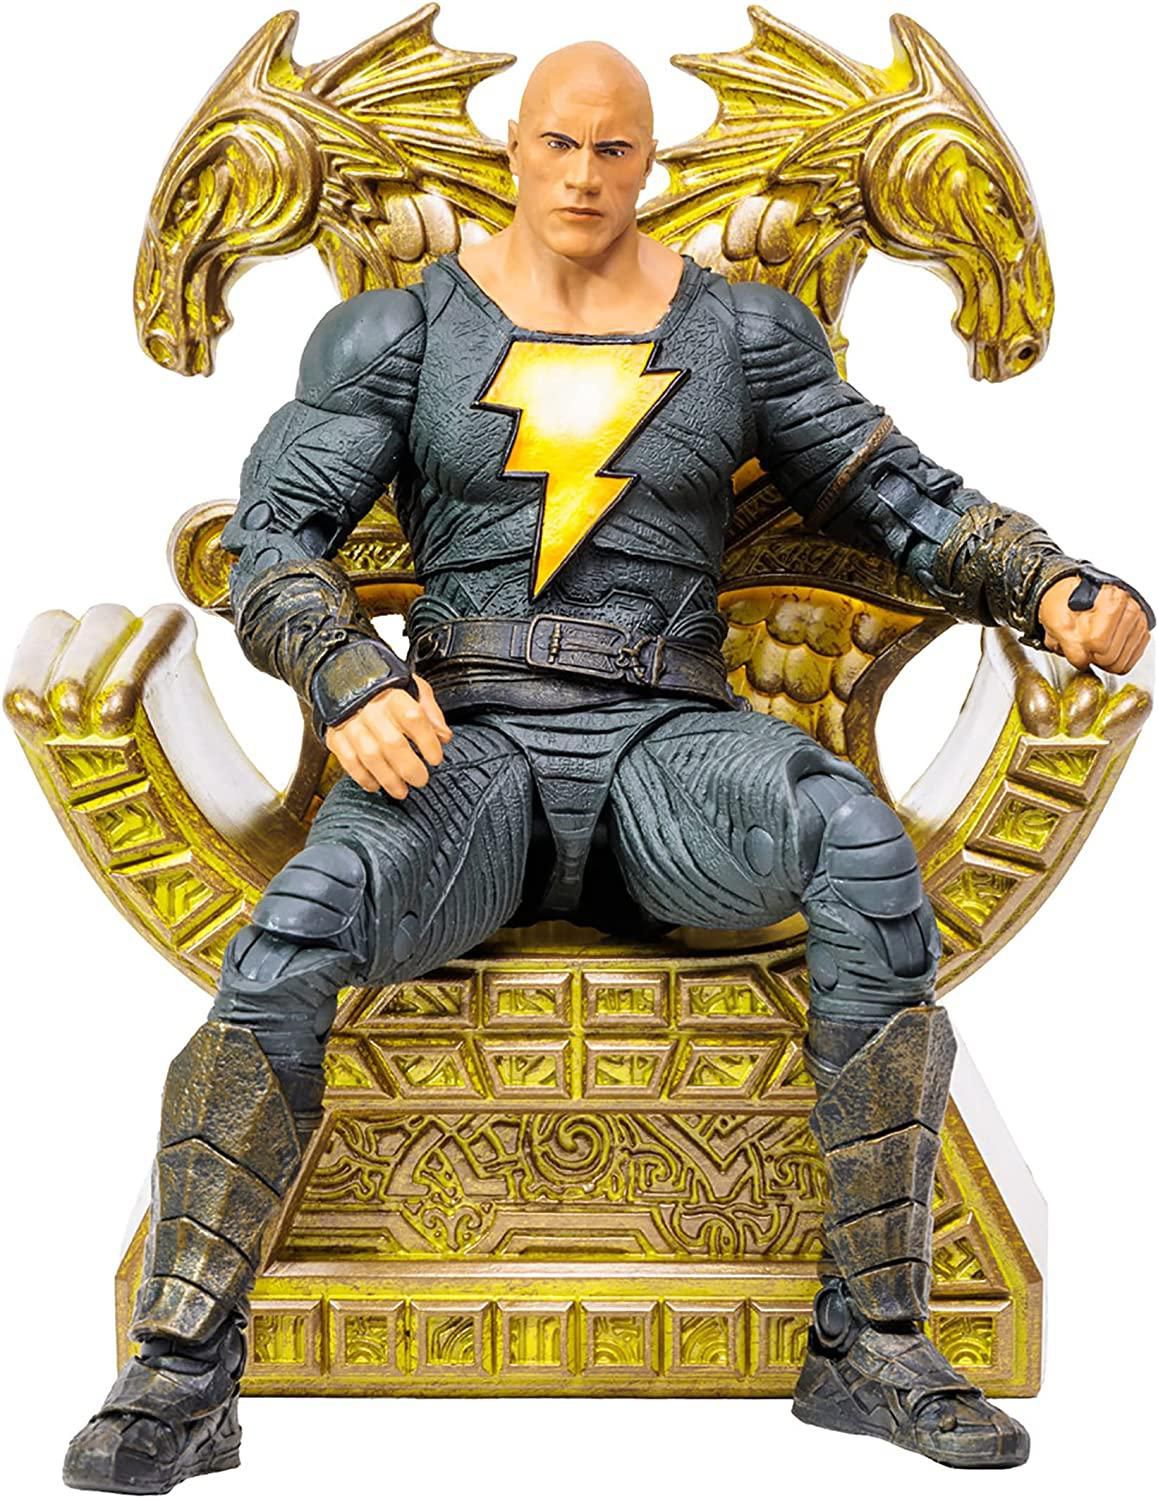 McFarlane Toys on X: Wonder Woman™ from Shazam! Fury of the Gods